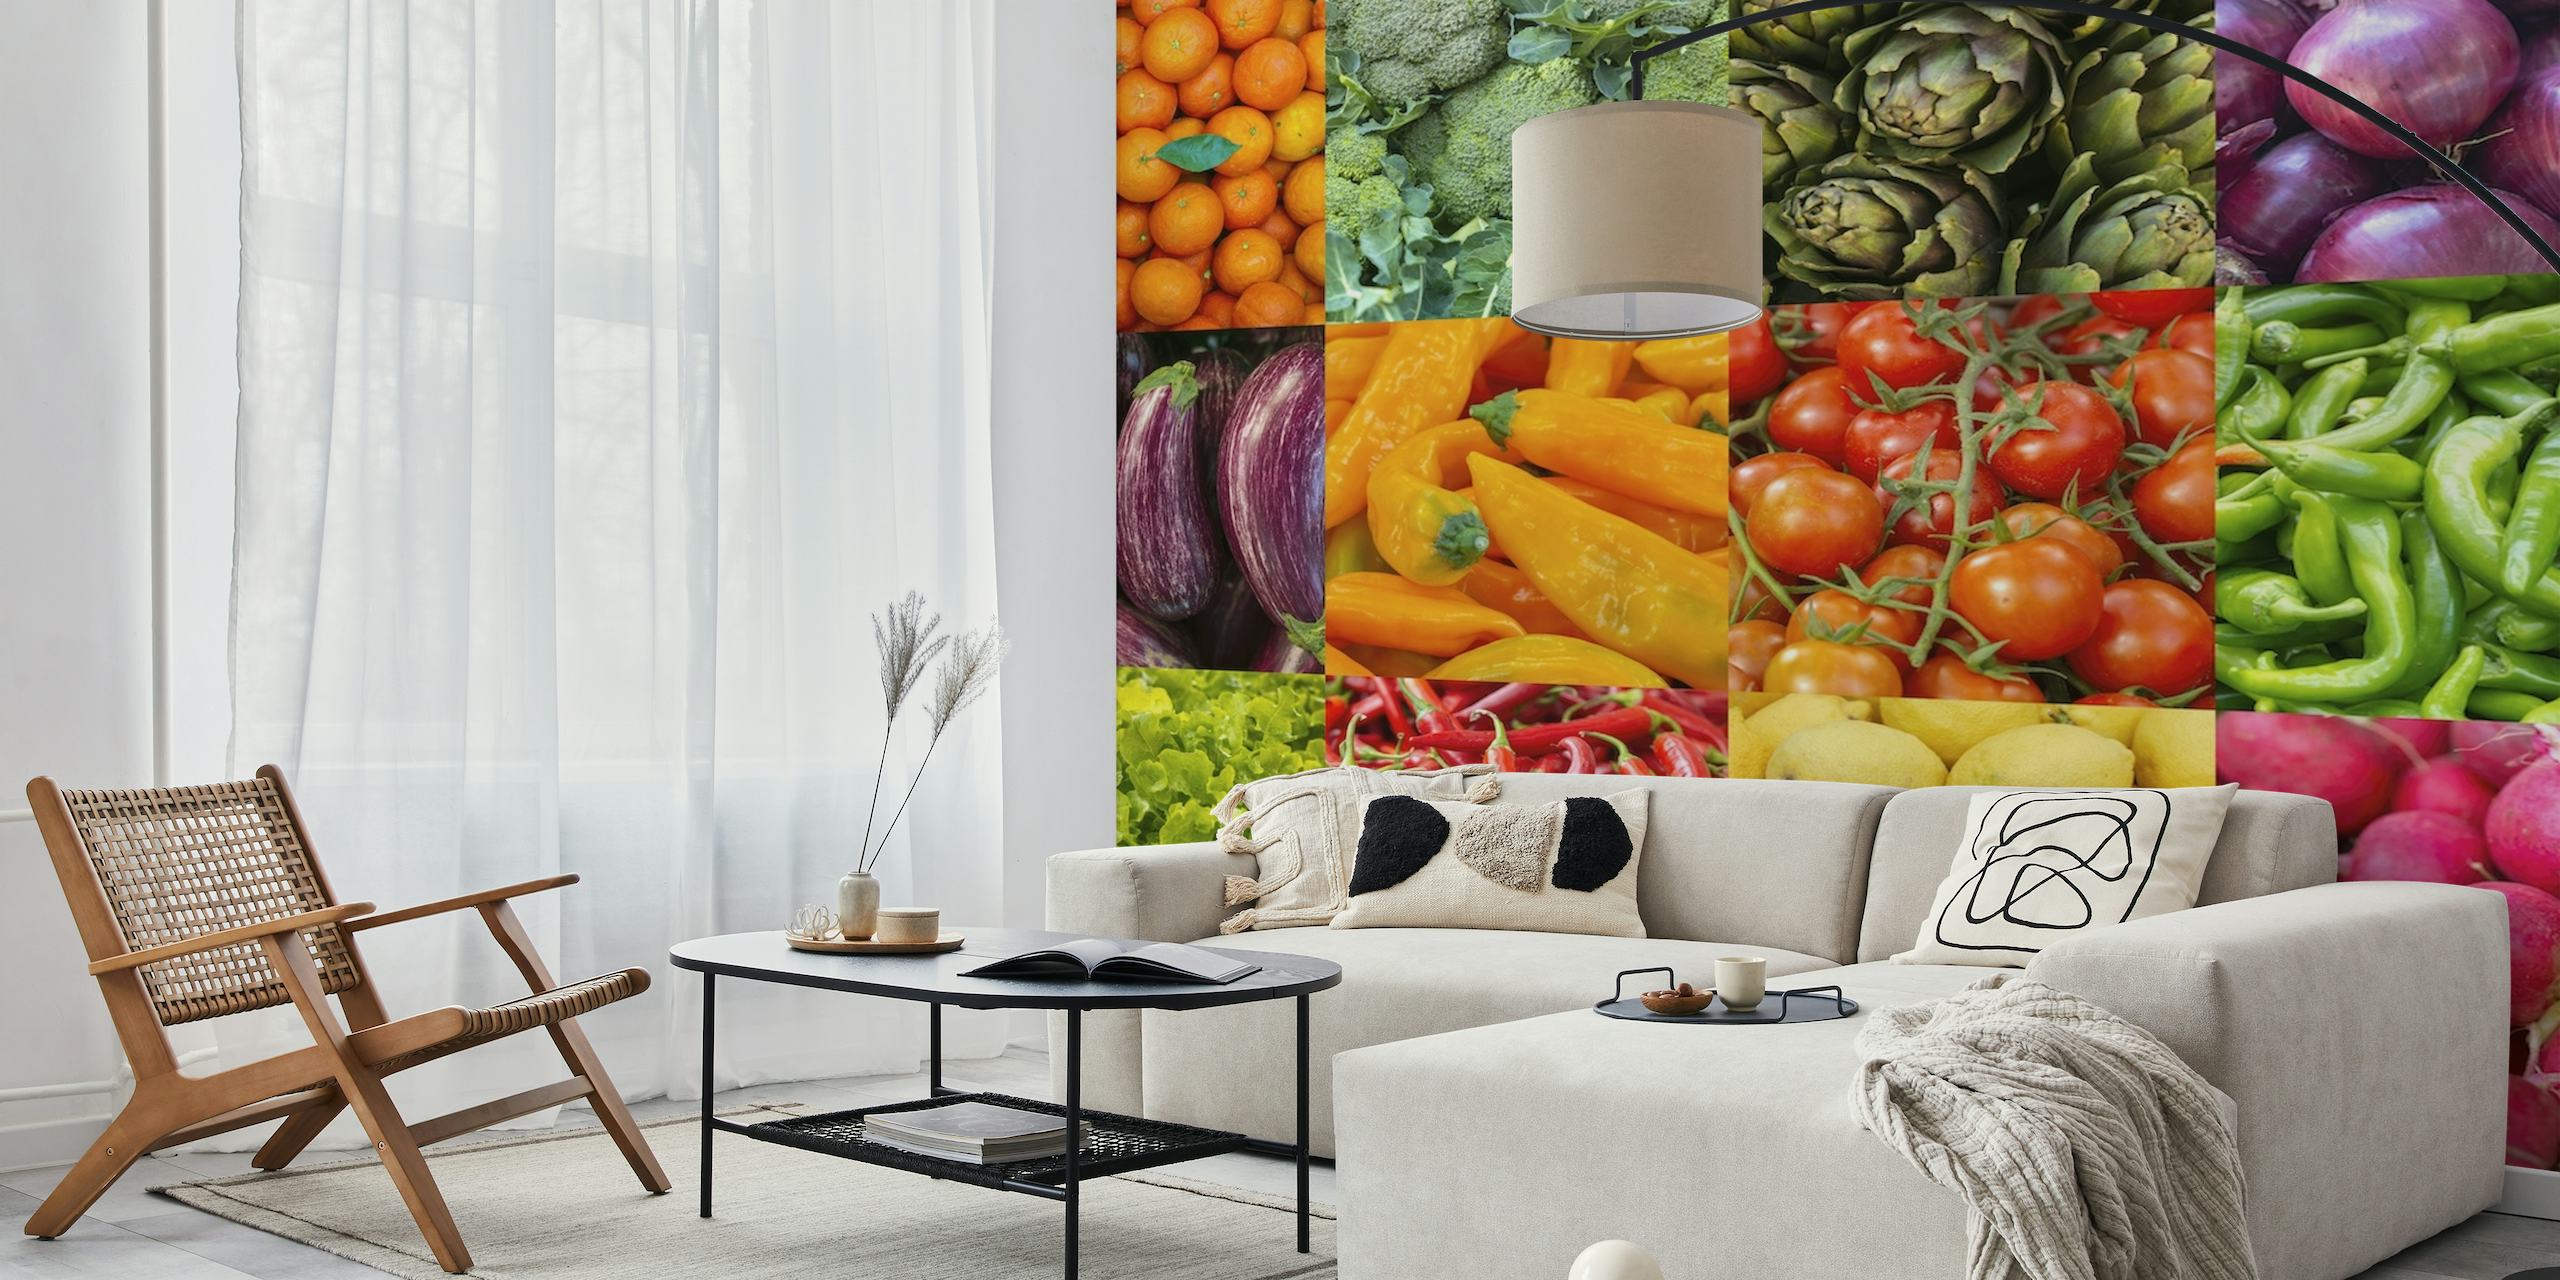 Fruit and veg collage papel pintado